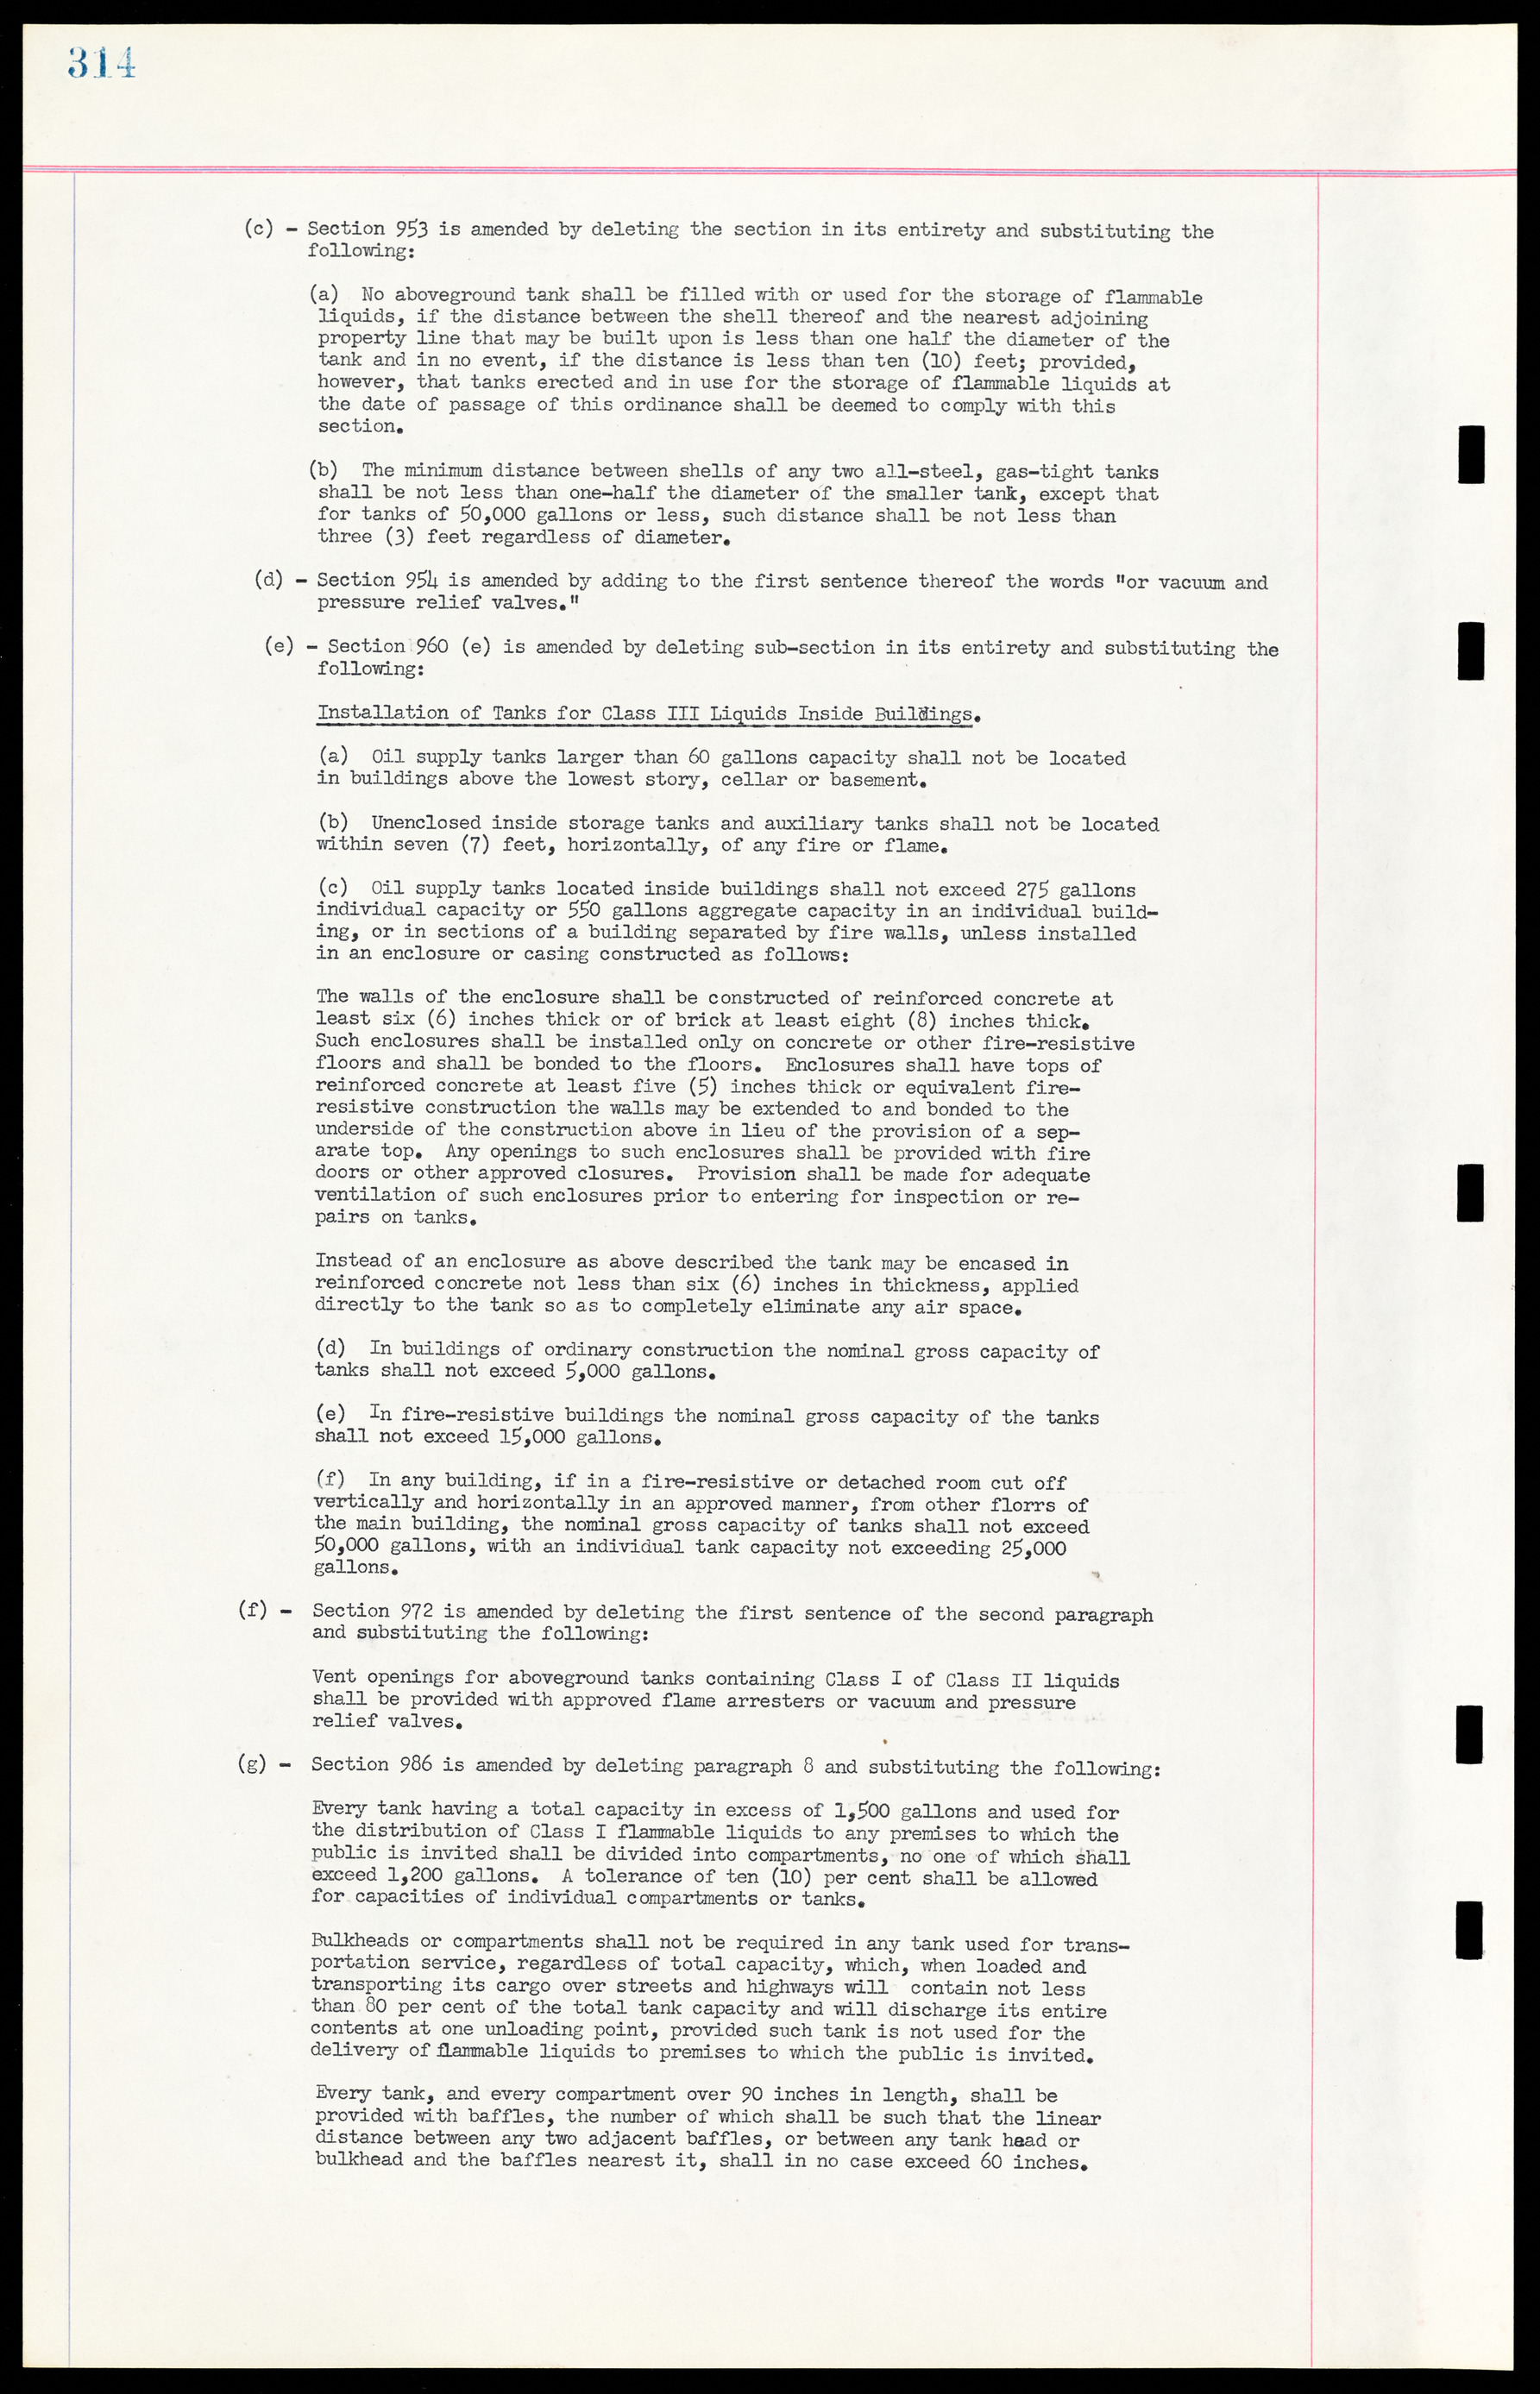 Las Vegas City Ordinances, March 31, 1933 to October 25, 1950, lvc000014-343